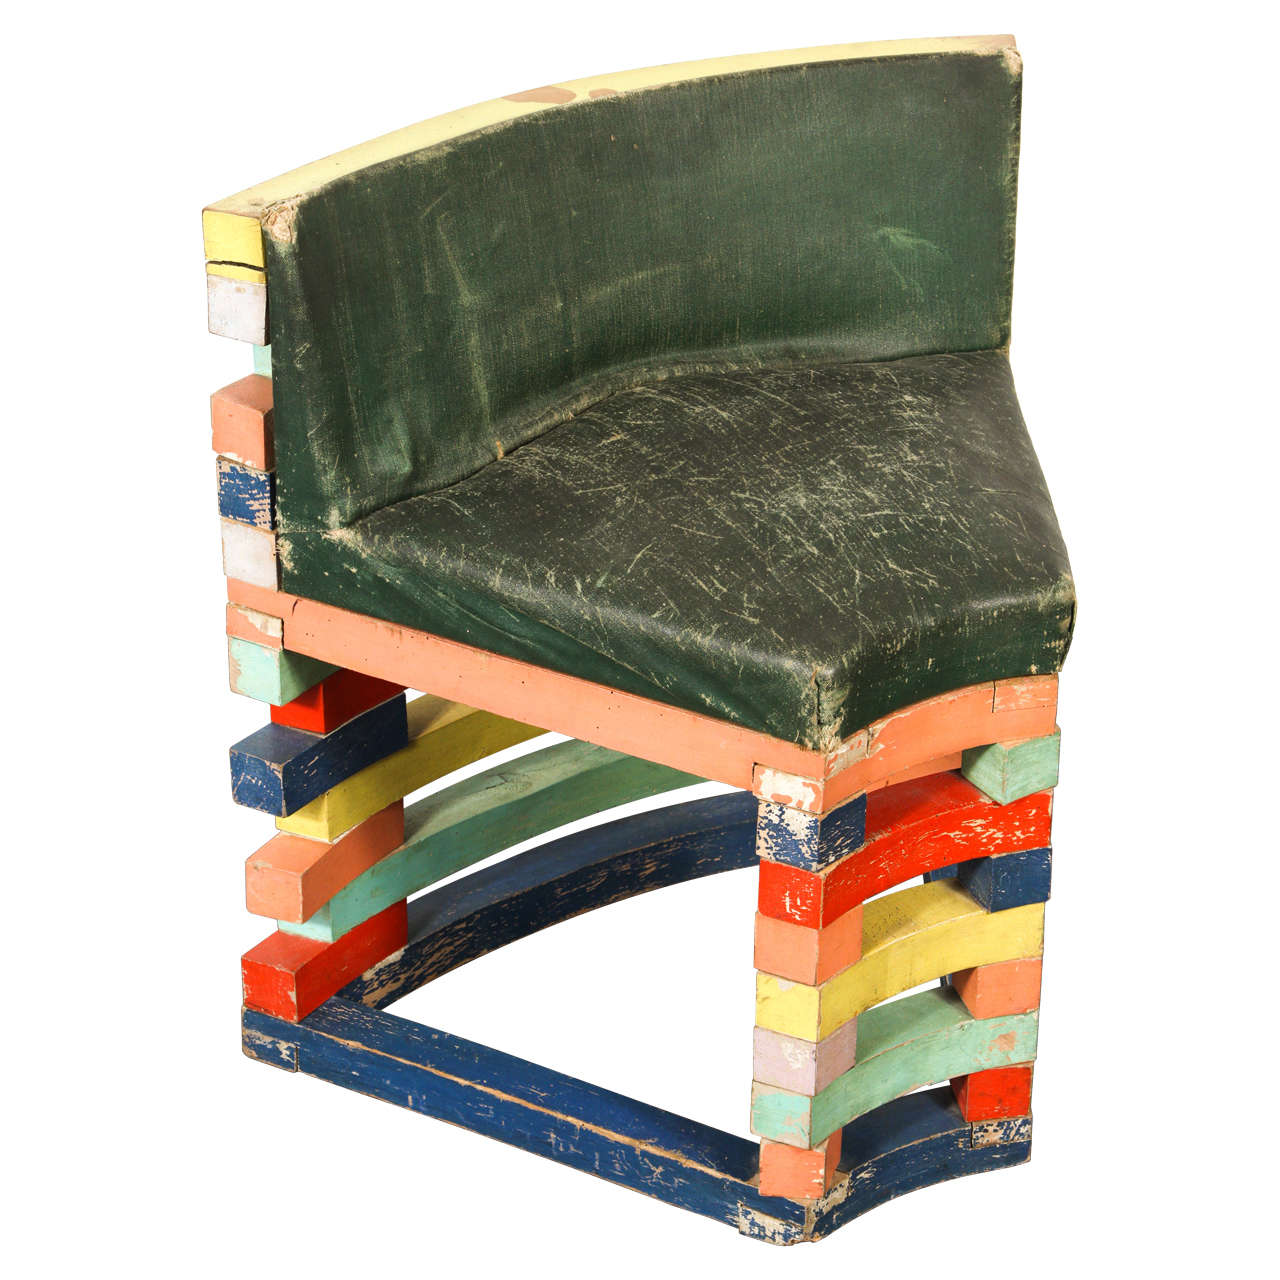 Constructivist Chair For Sale